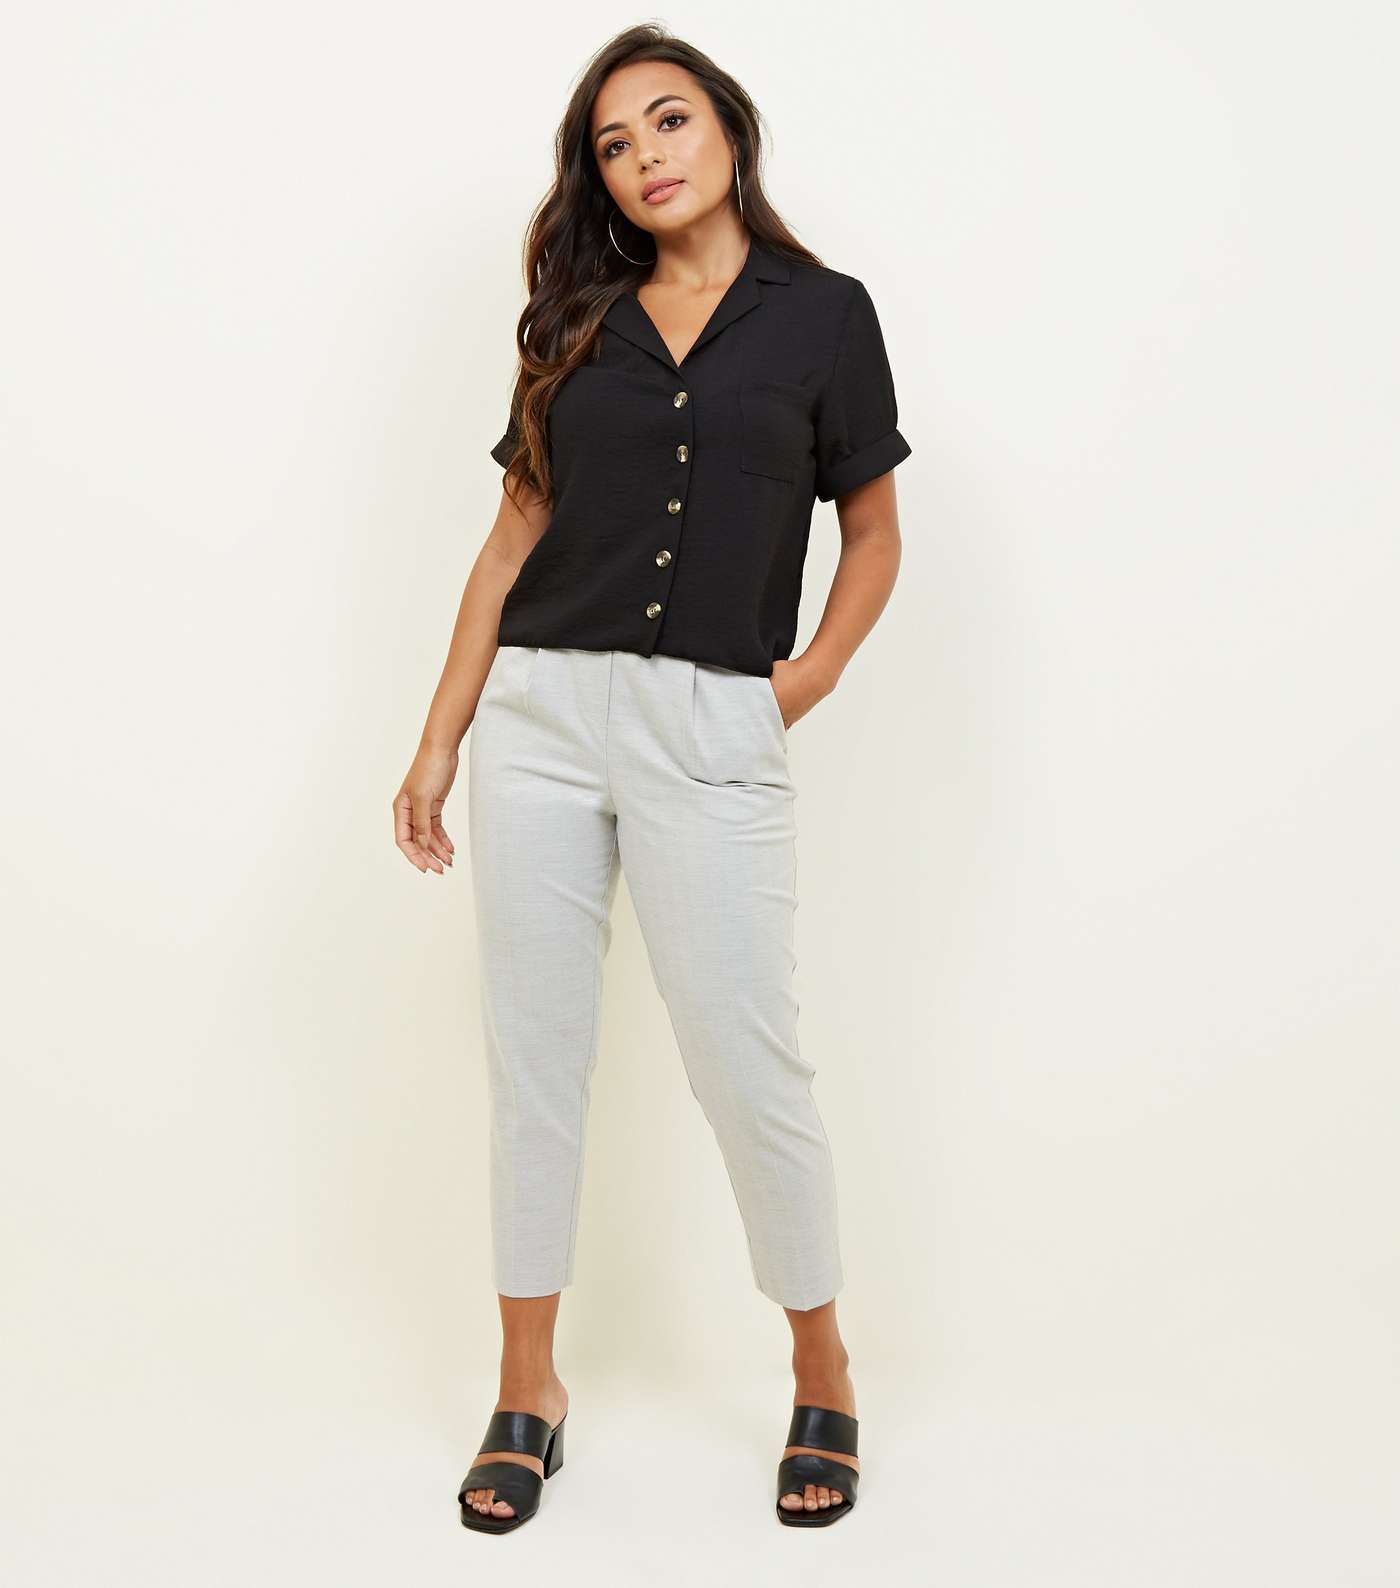 Petite Black Short Sleeve Linen-Look Shirt Image 2